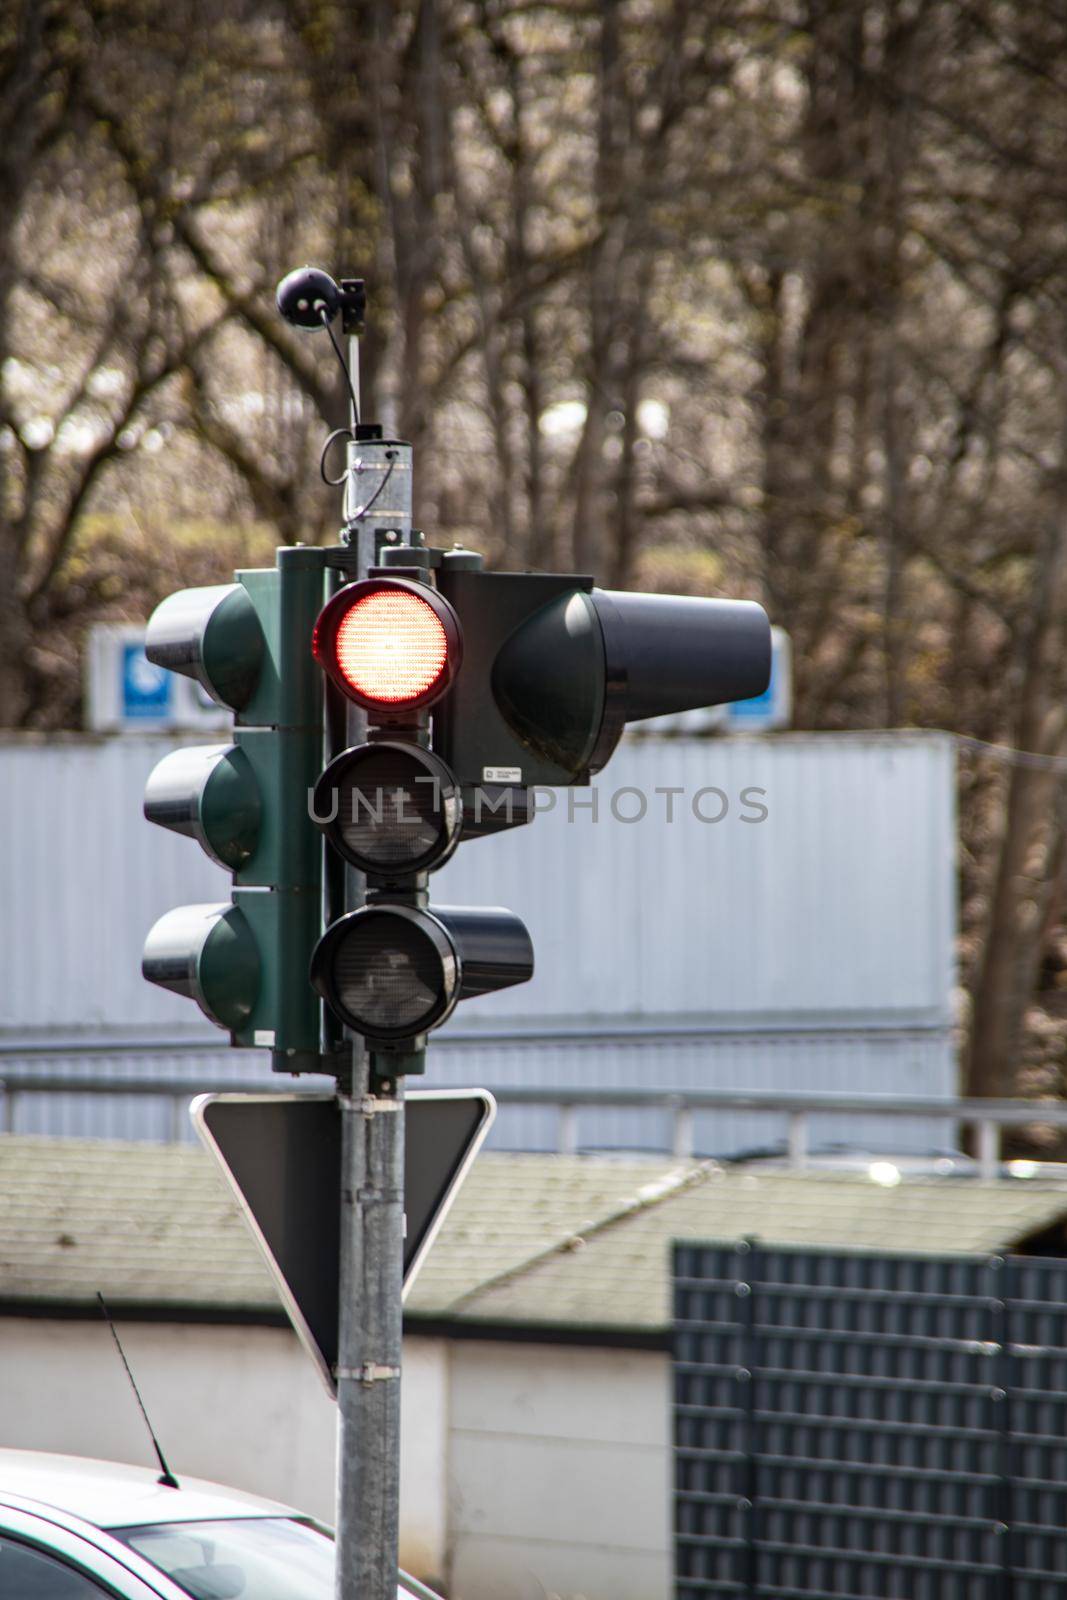 Traffic lights in road traffic for traffic control